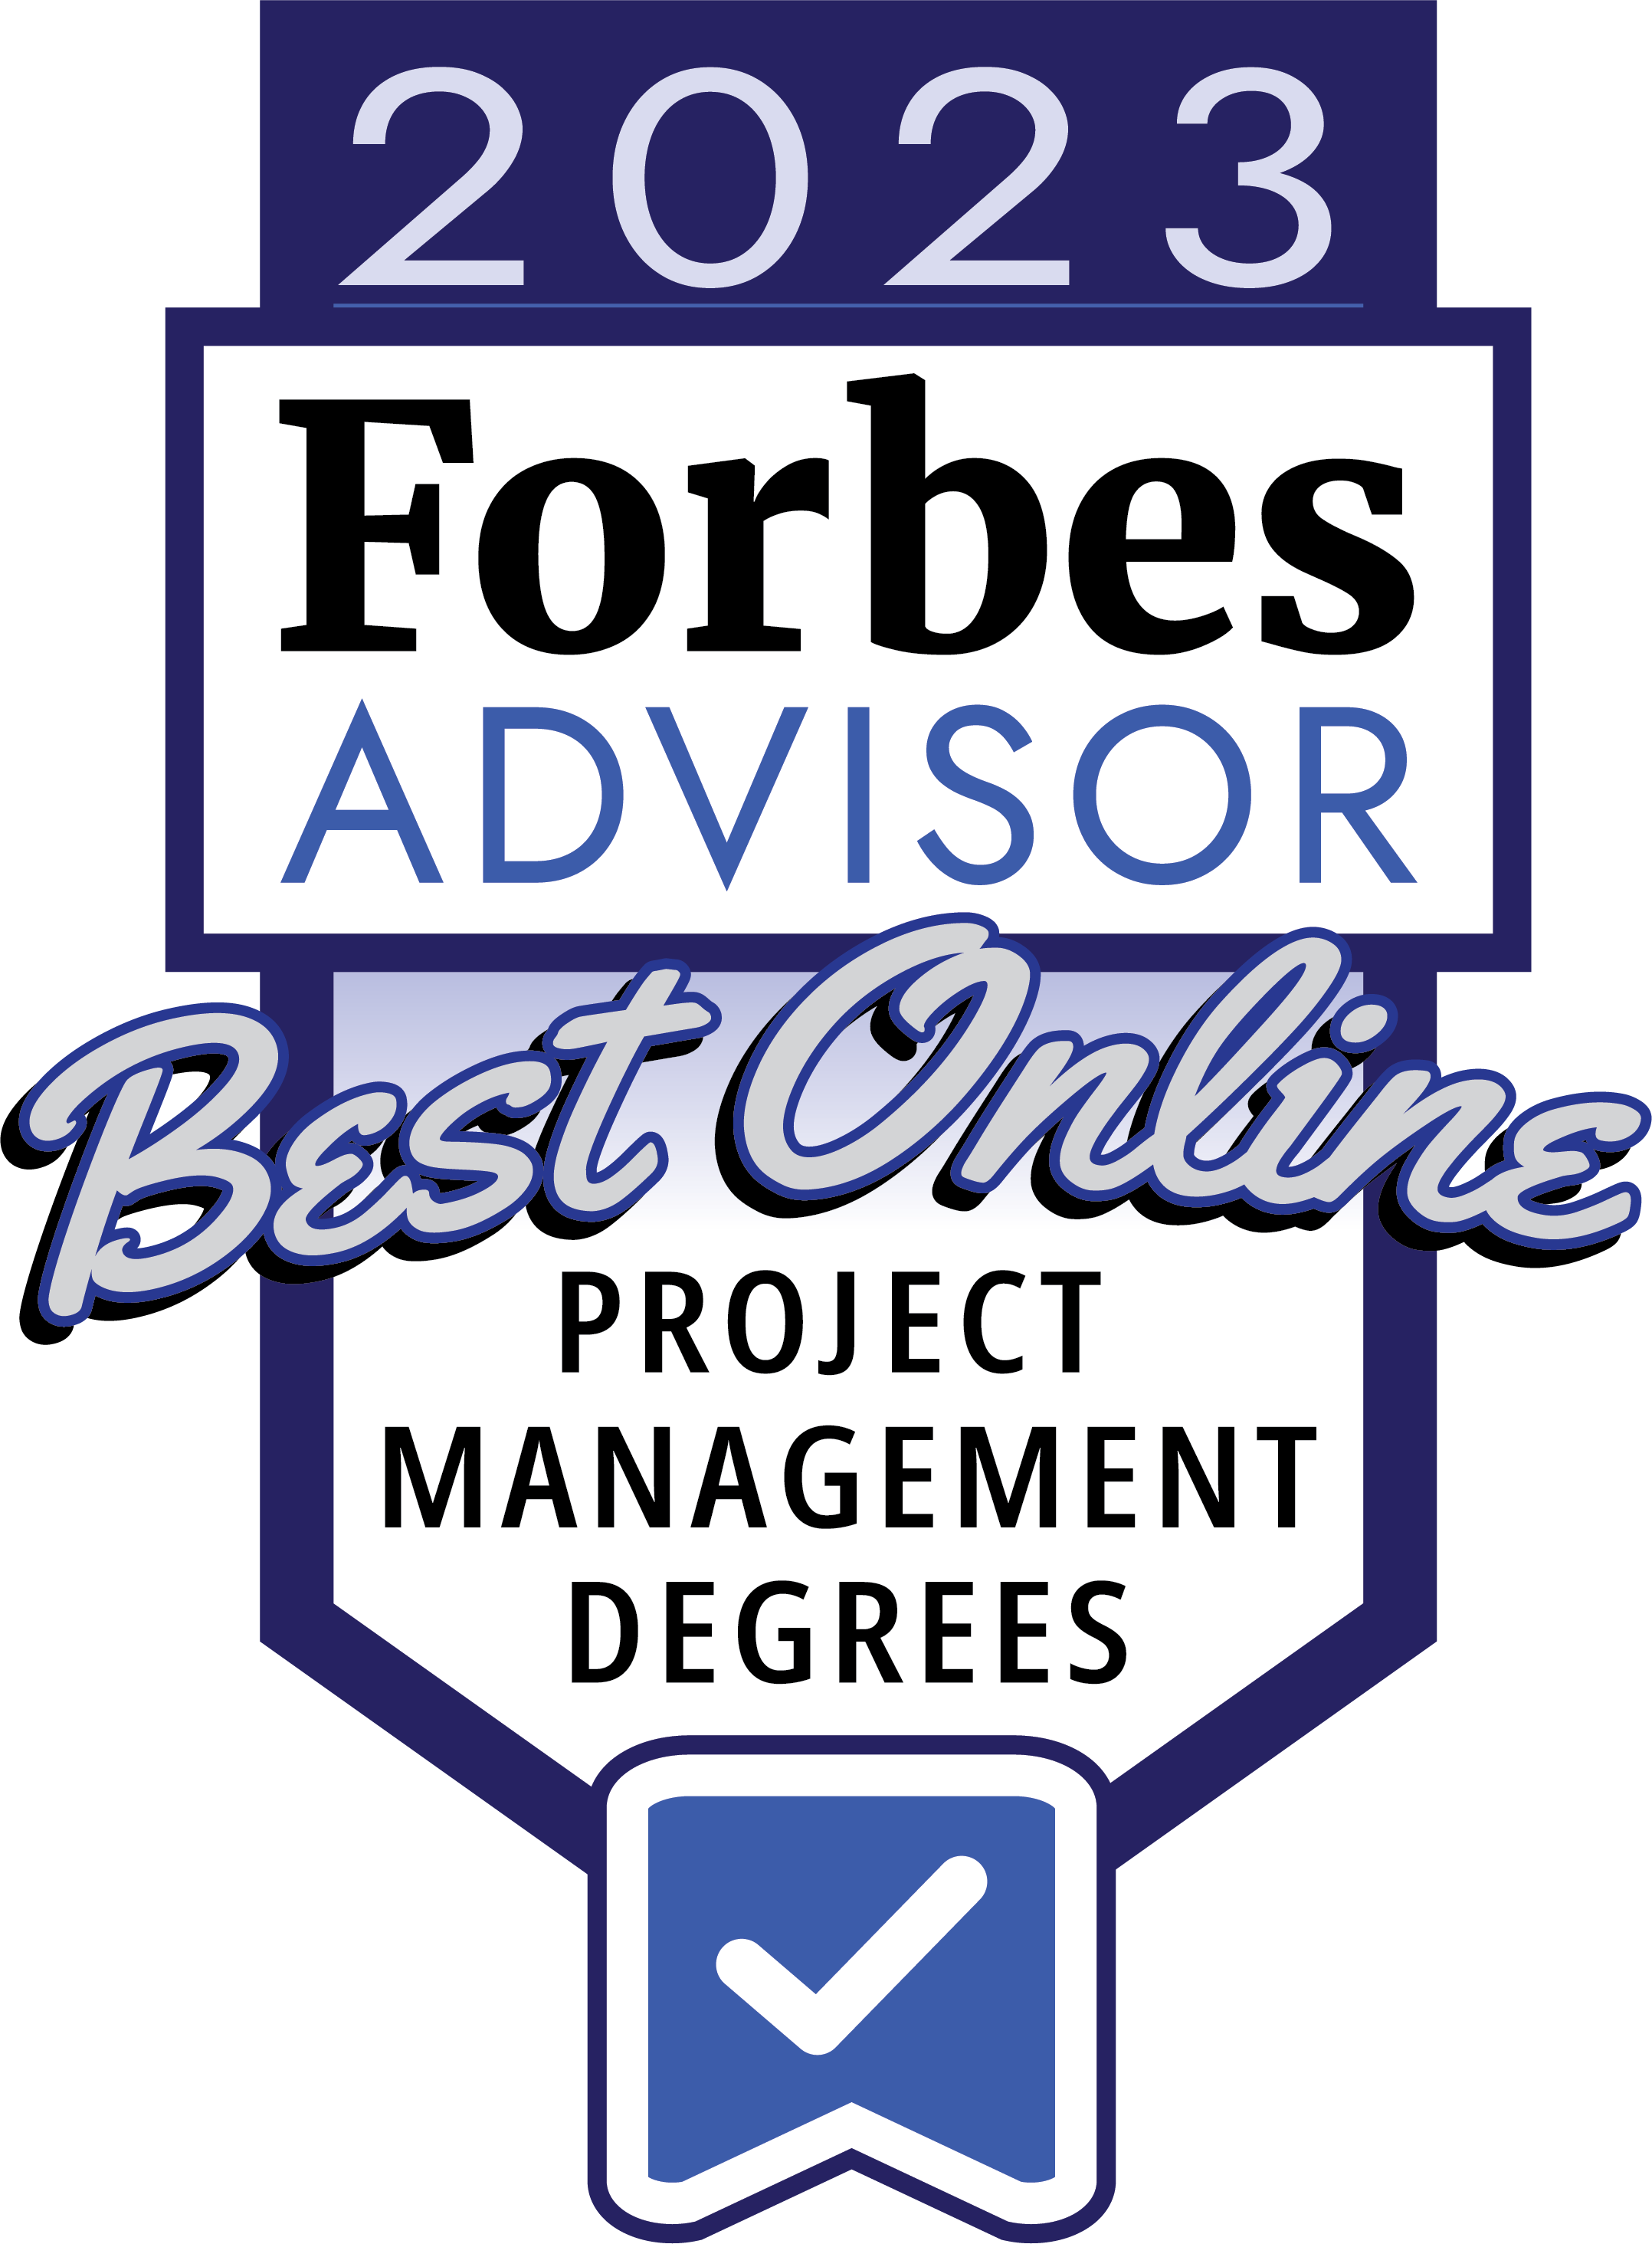 Forbes Advisor Best Online Project Management Degrees